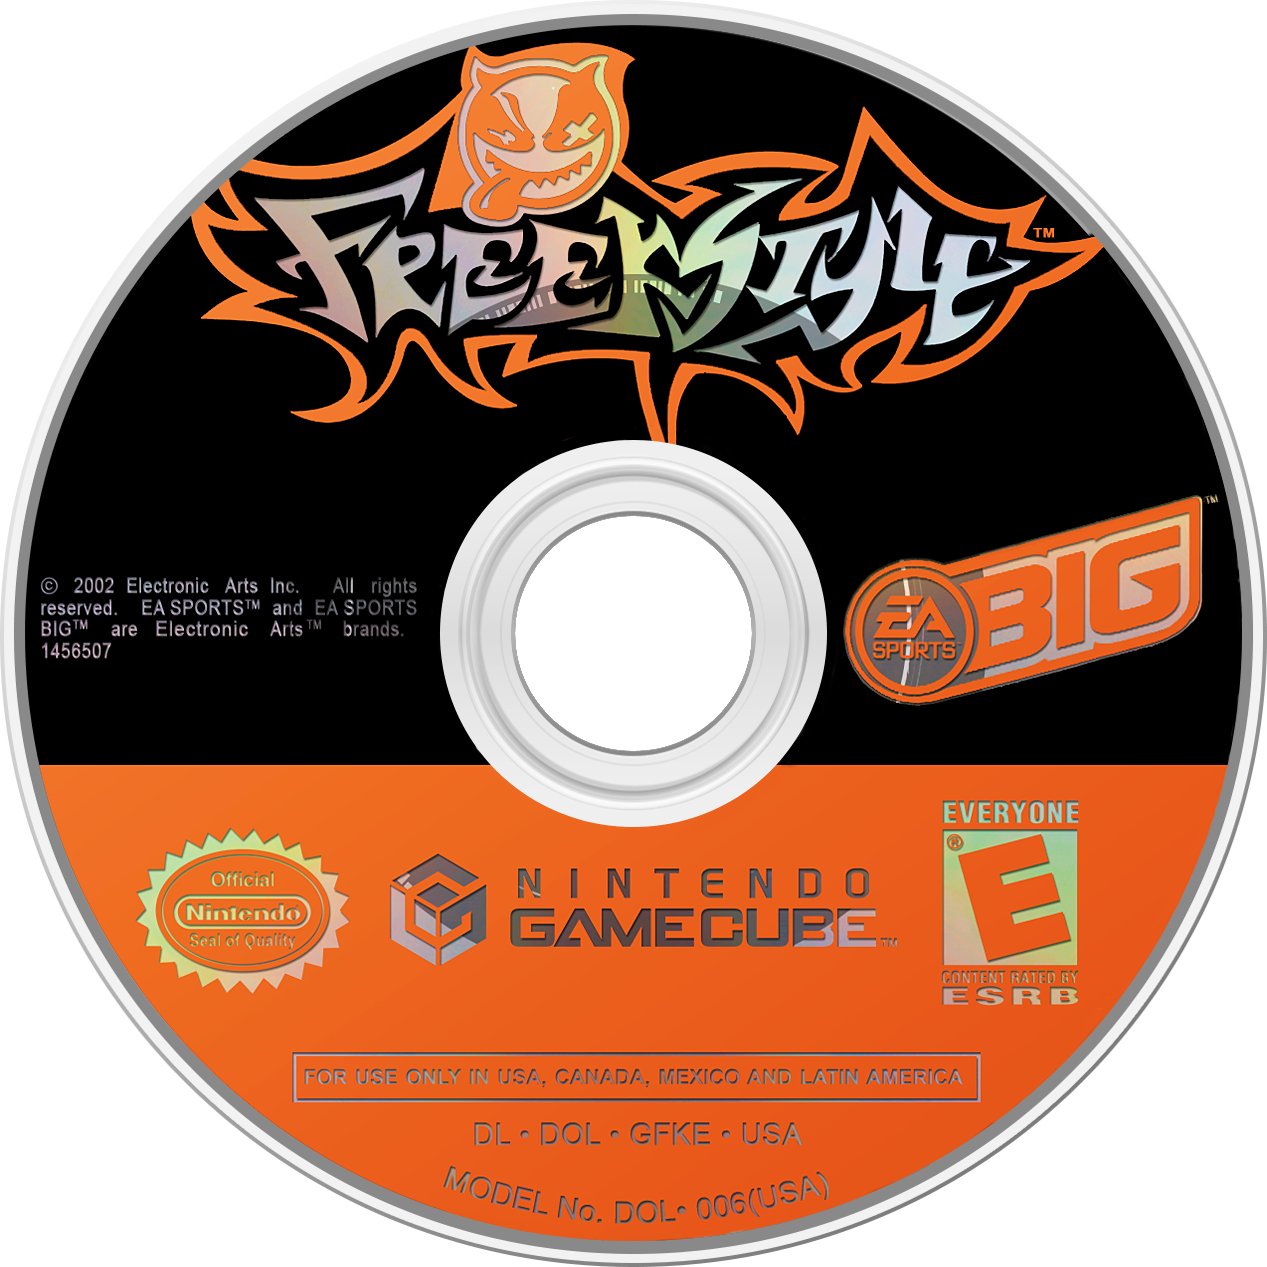 Freekstyle - Nintendo GameCube Game